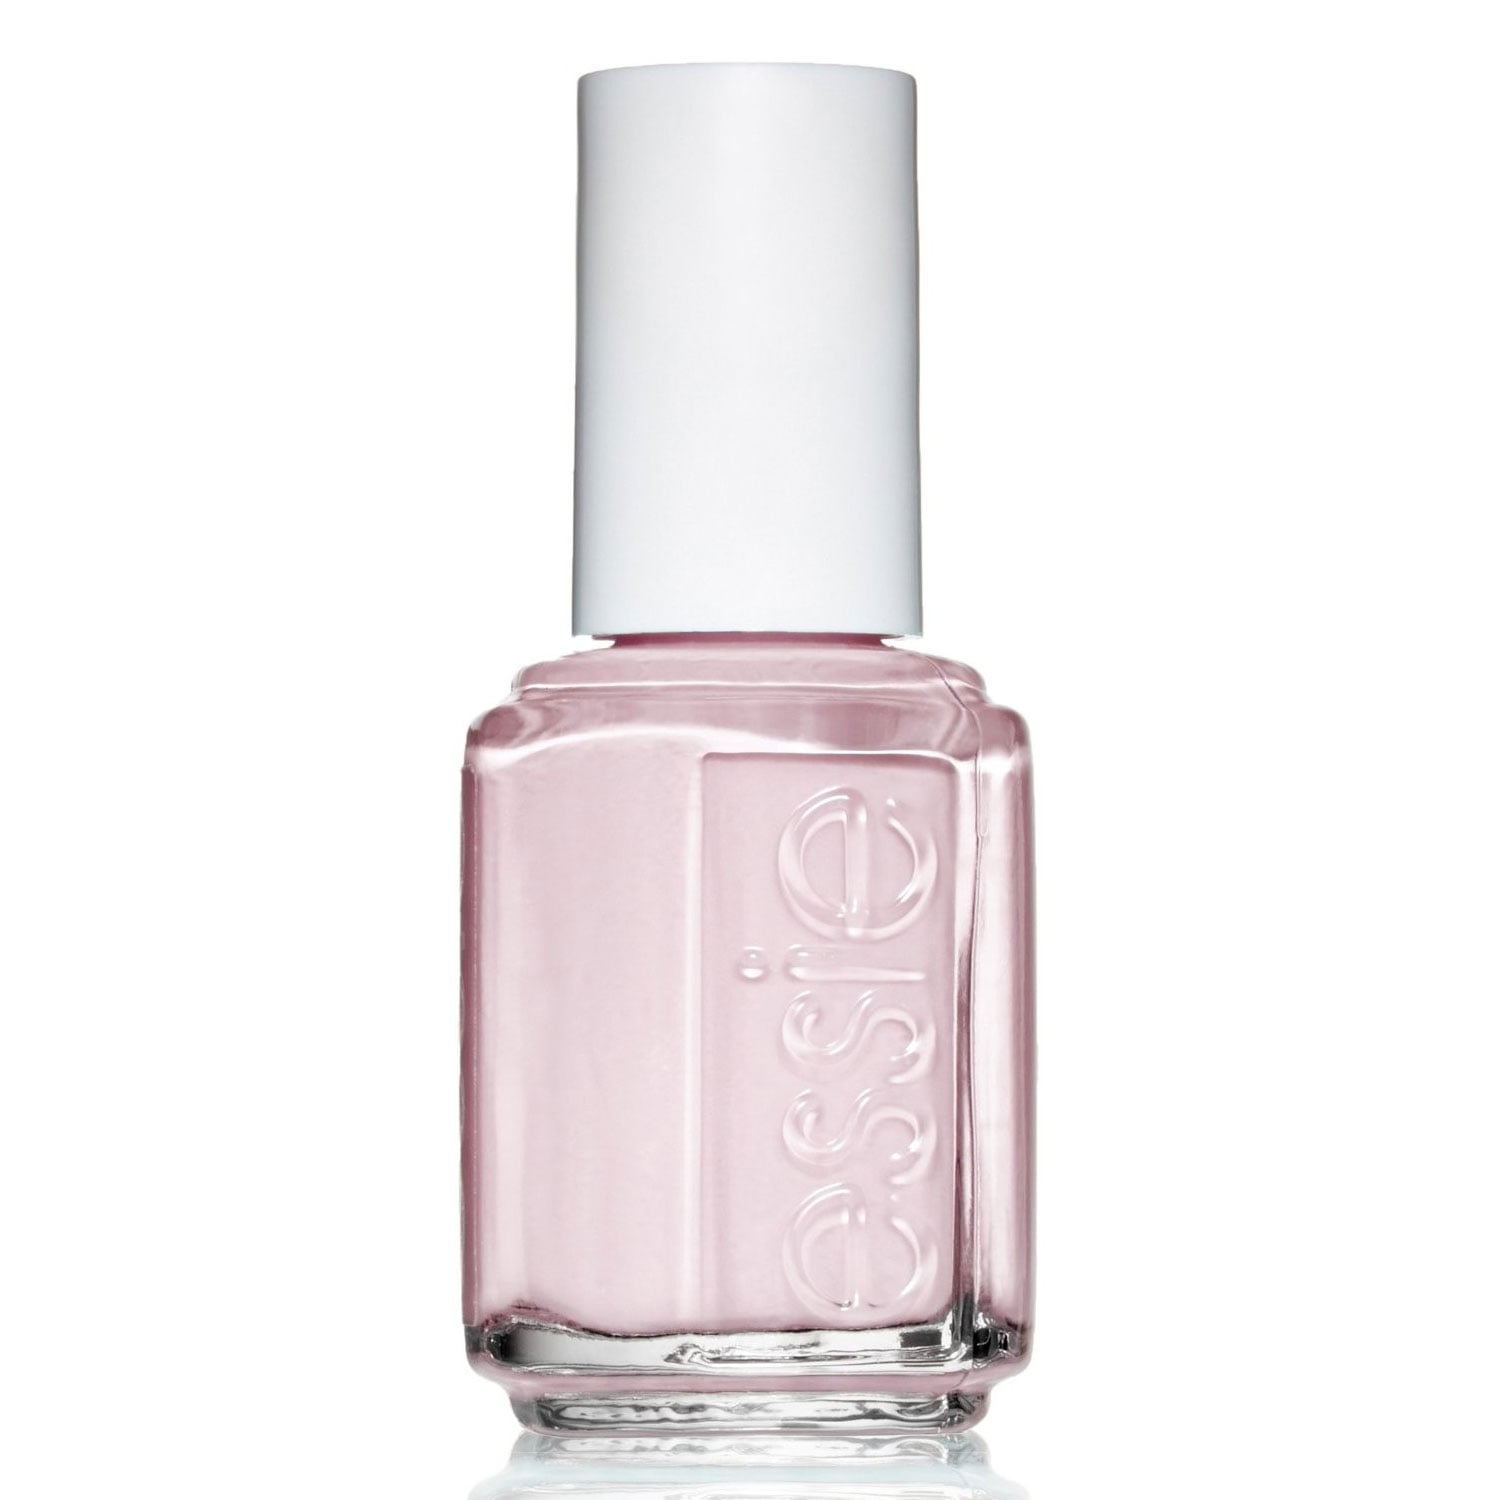 essie pink nail polish colors